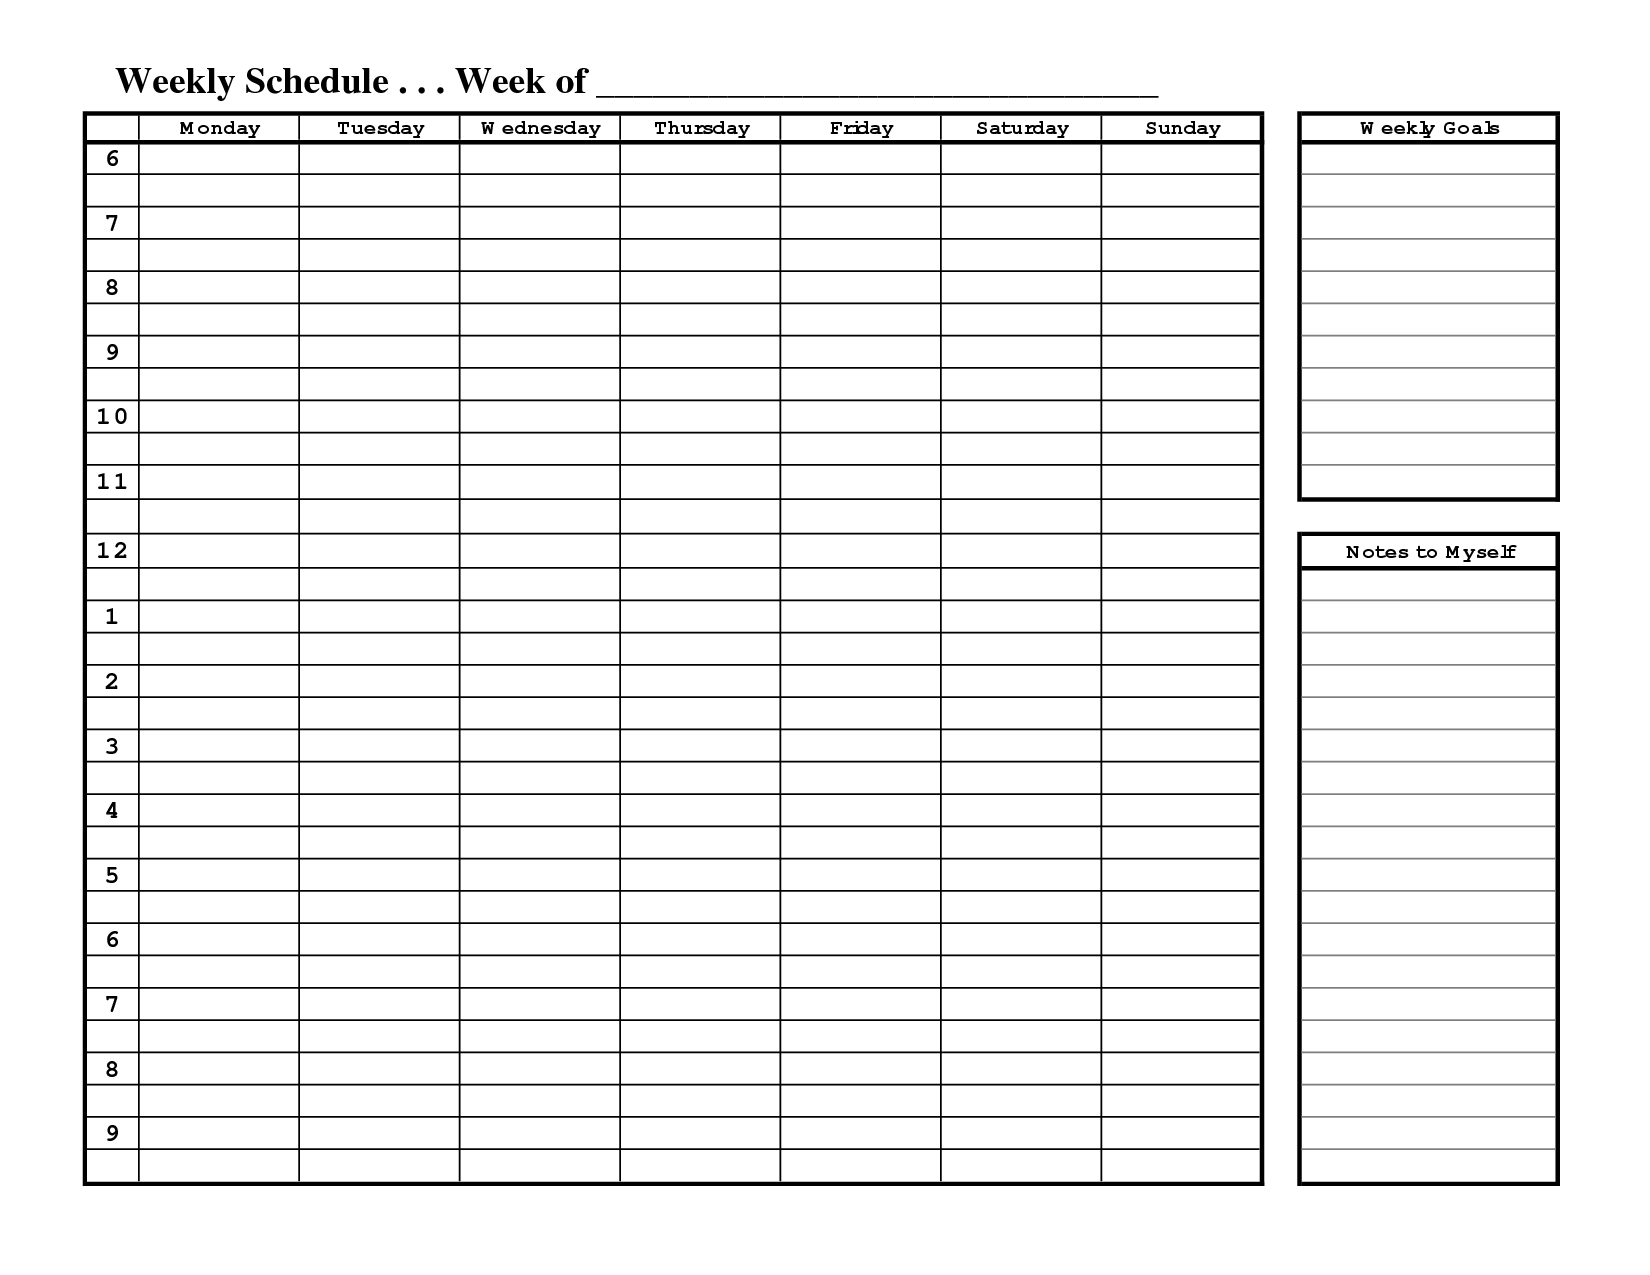 Free Printable Weekly Schedule Template | Organize My Life - Free Printable Schedule